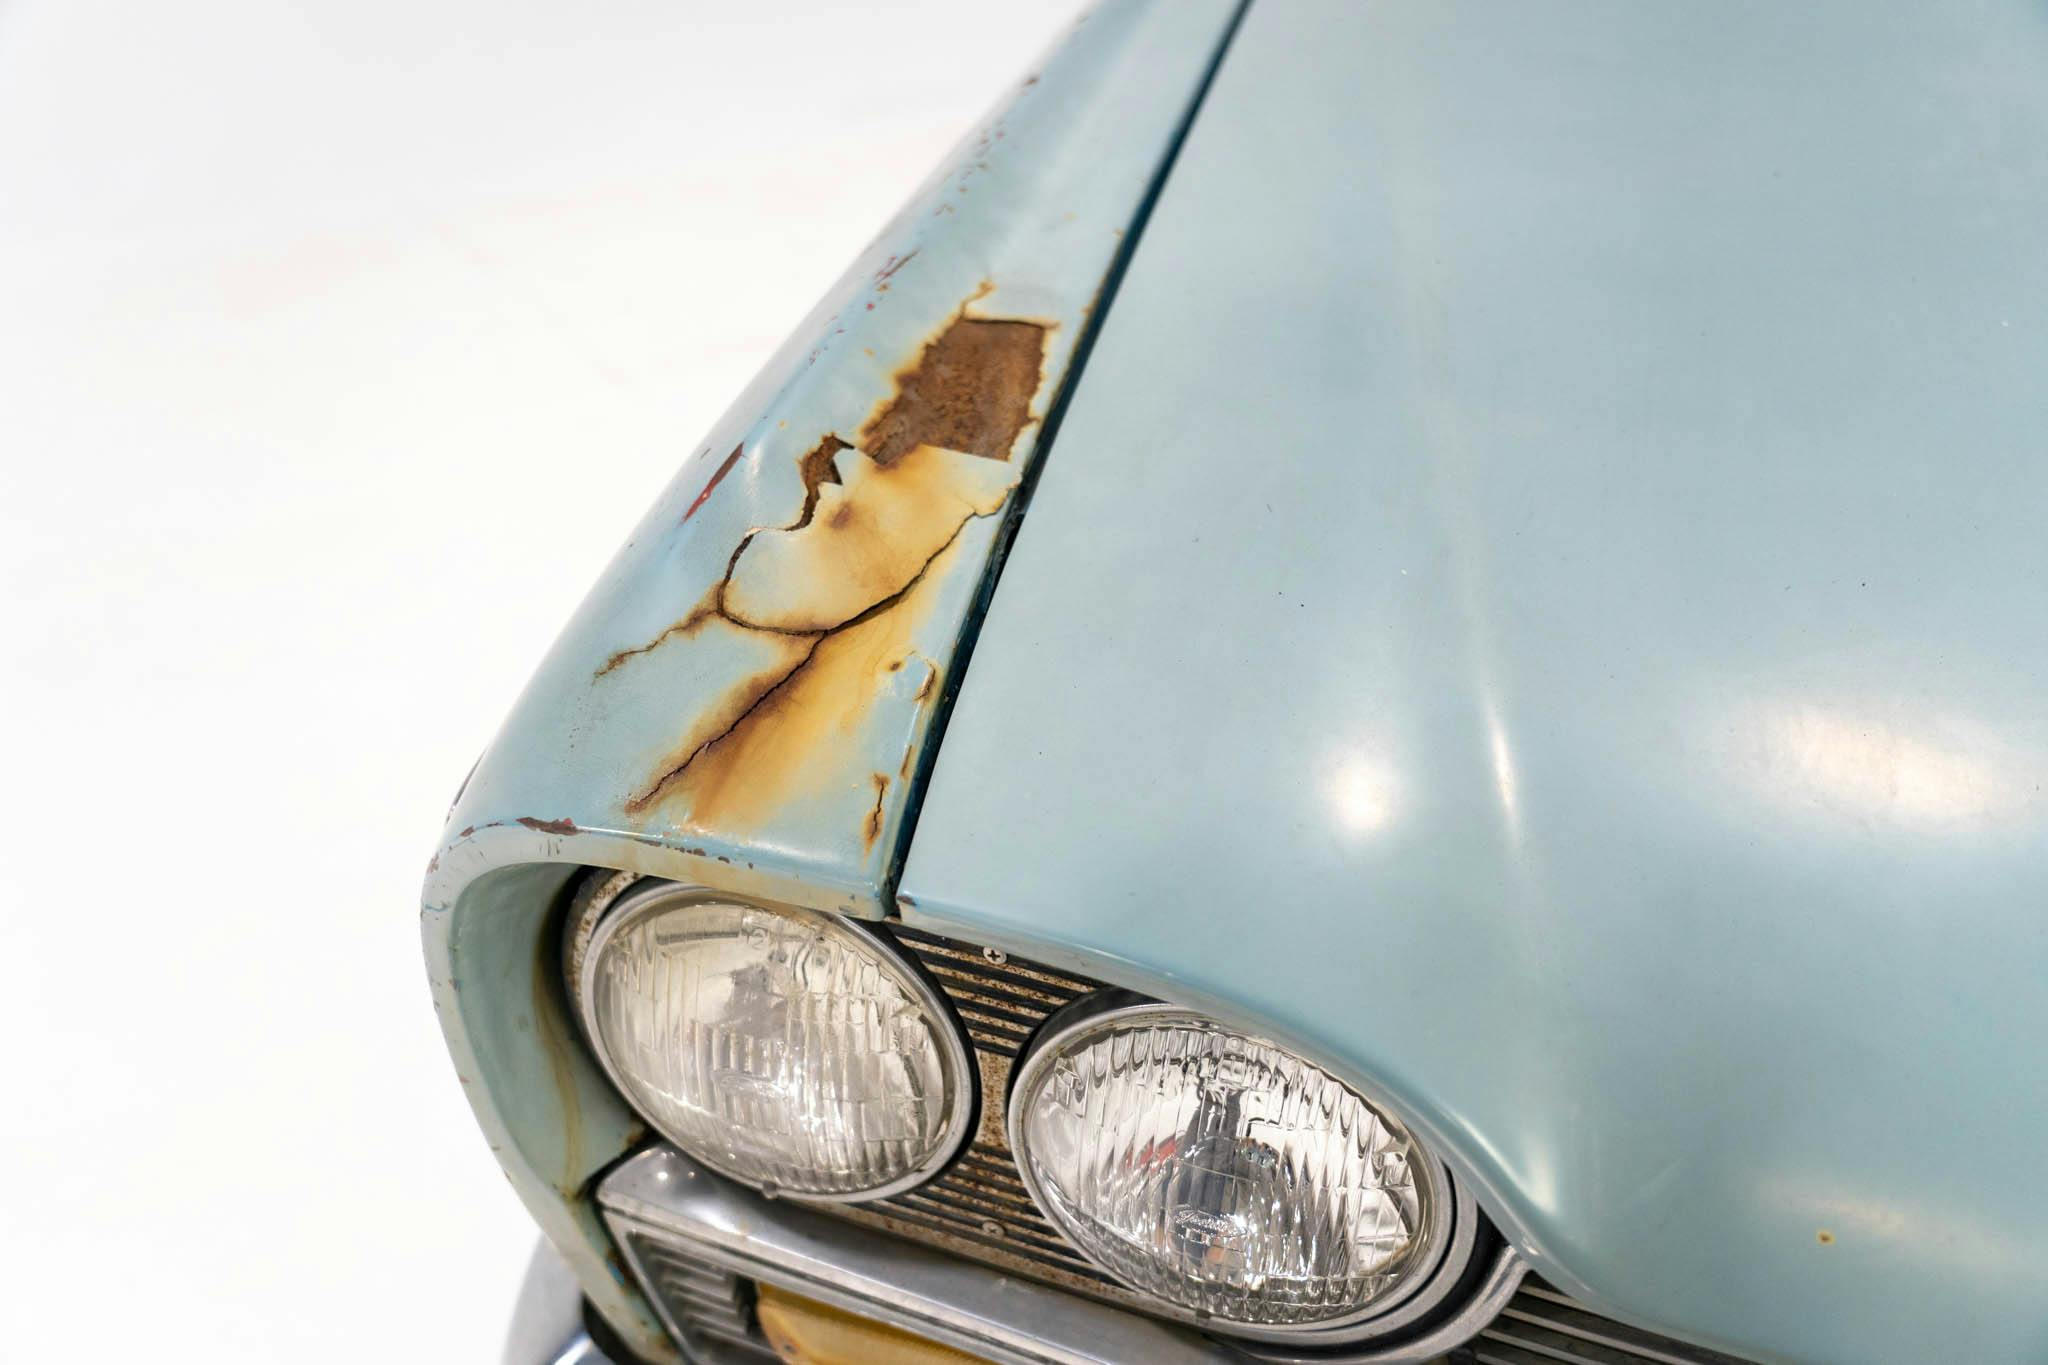 1964 Nissan Cedric unrestored render rust headlight